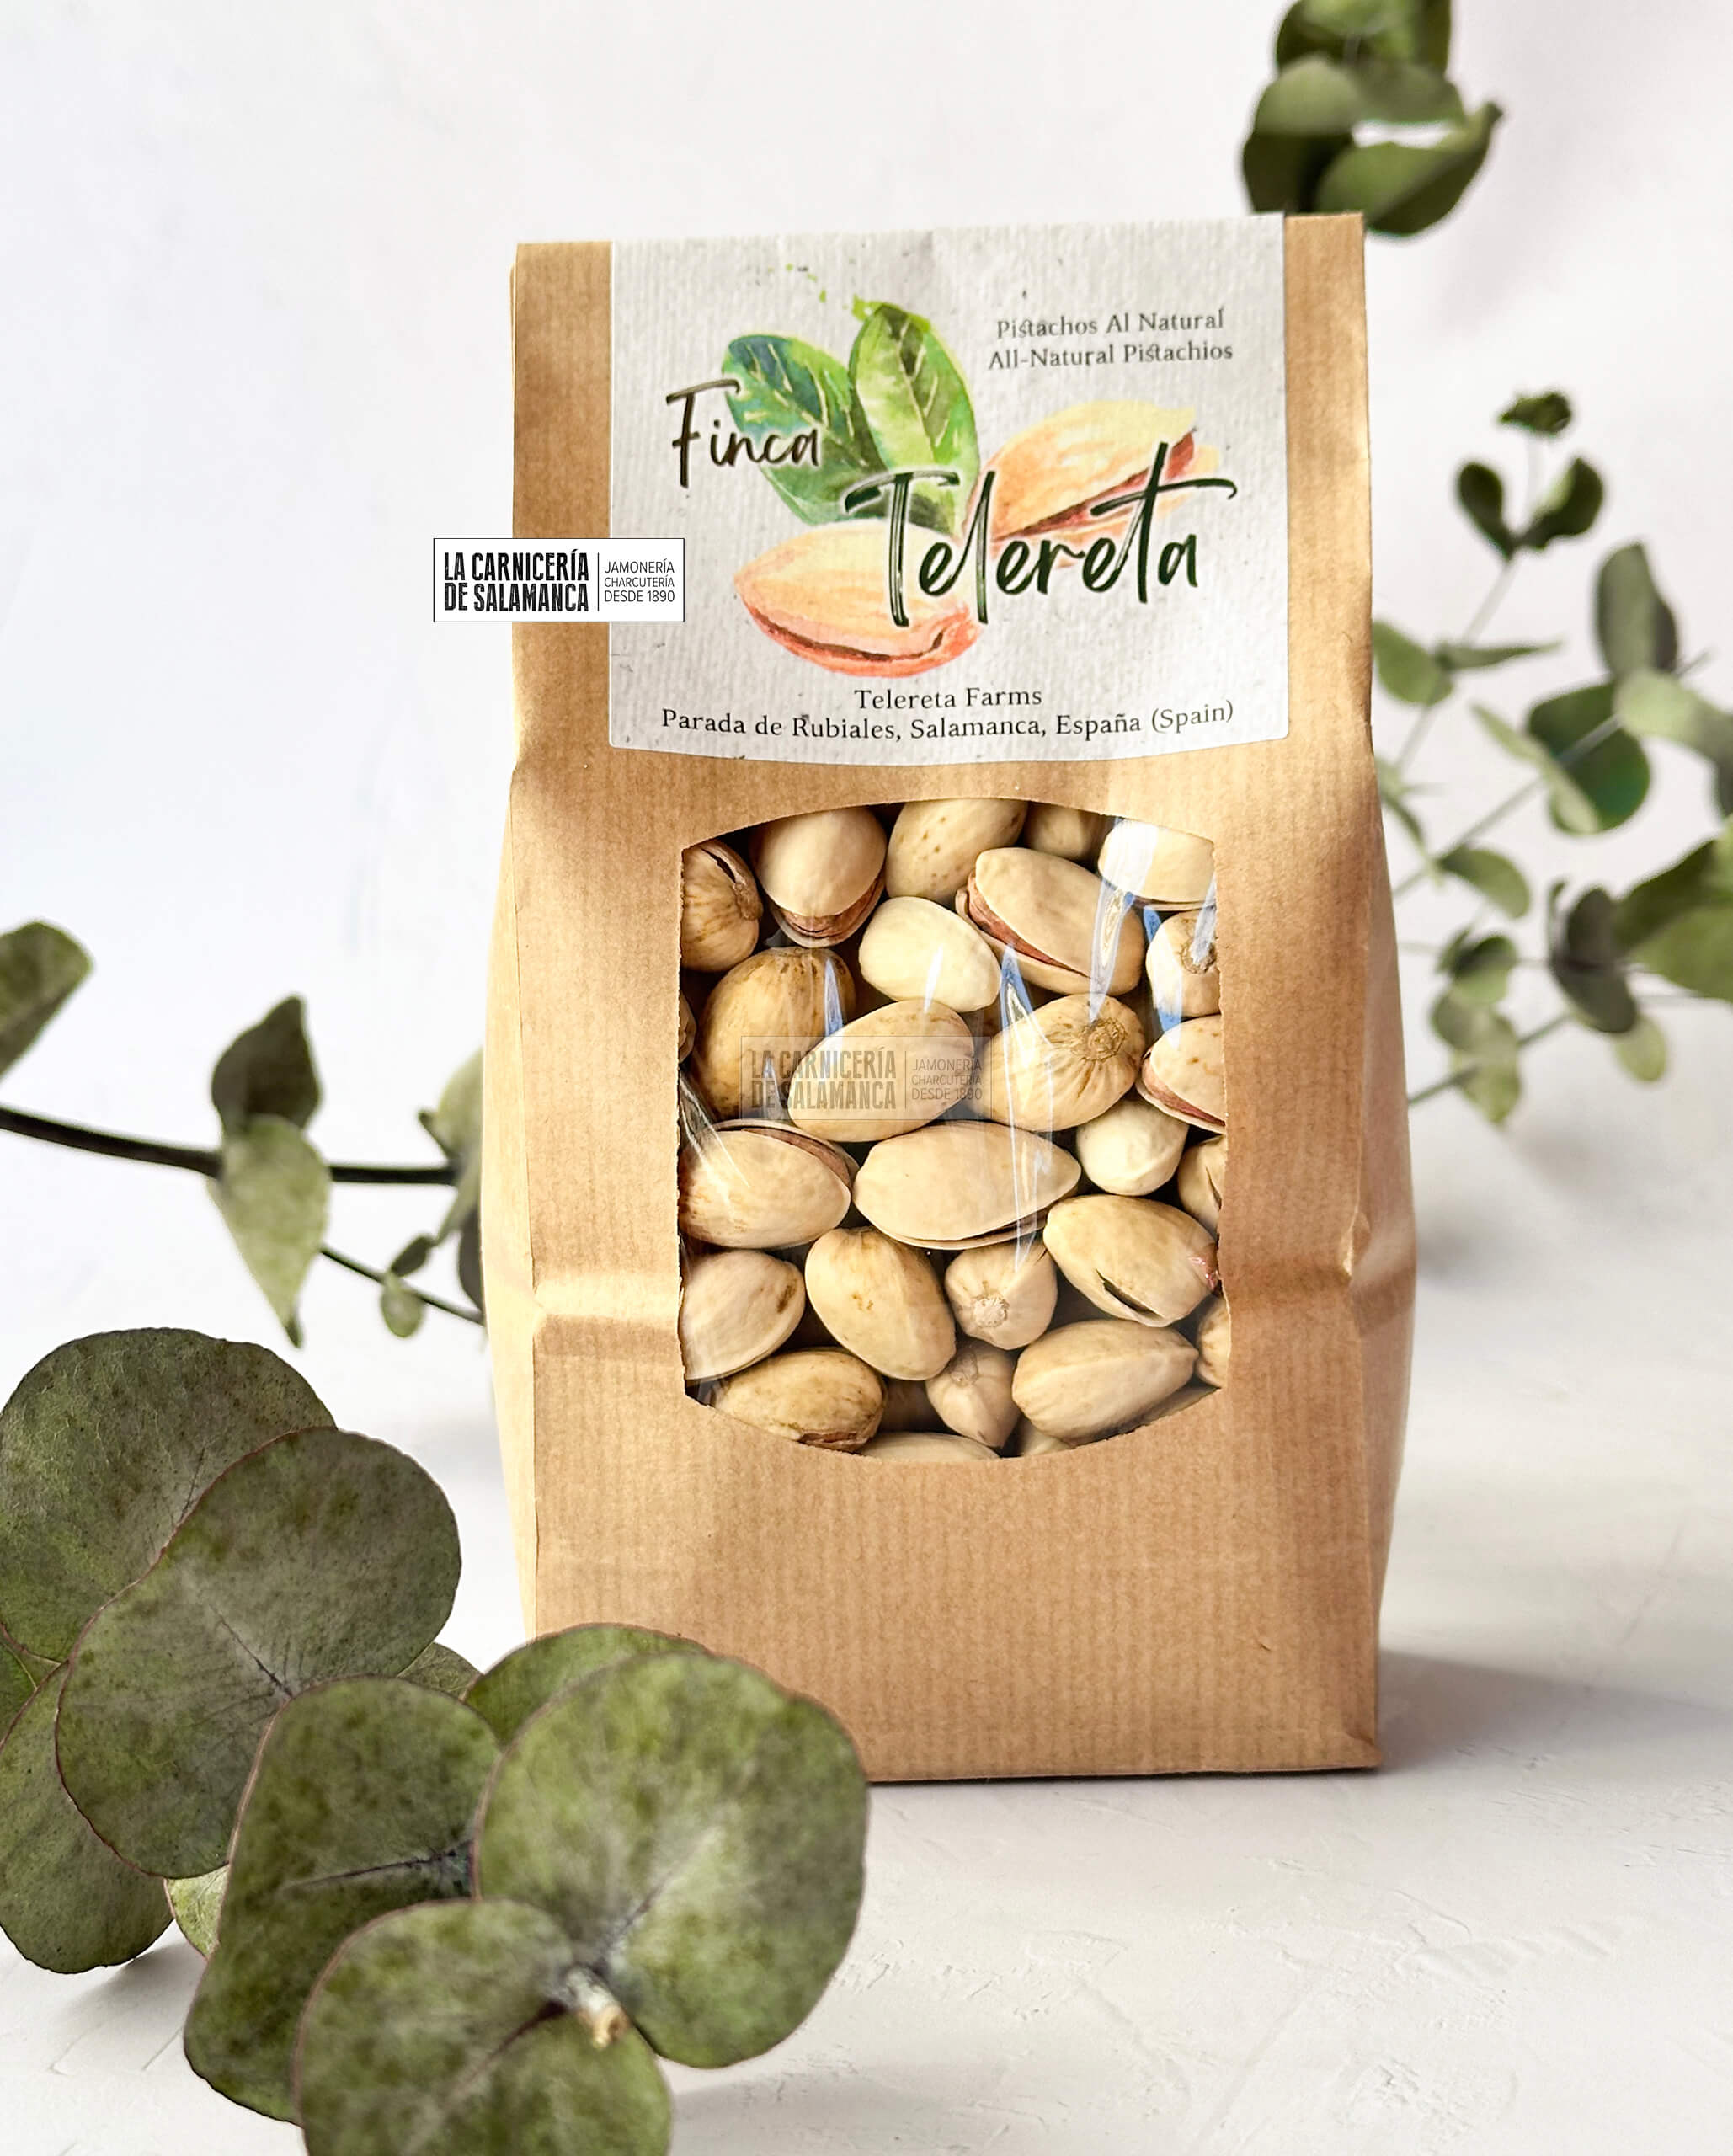 Pistachos Finca La Telereta, comprar pistachos online, pistachos al natural, pistachos de agripilar, @agripilar